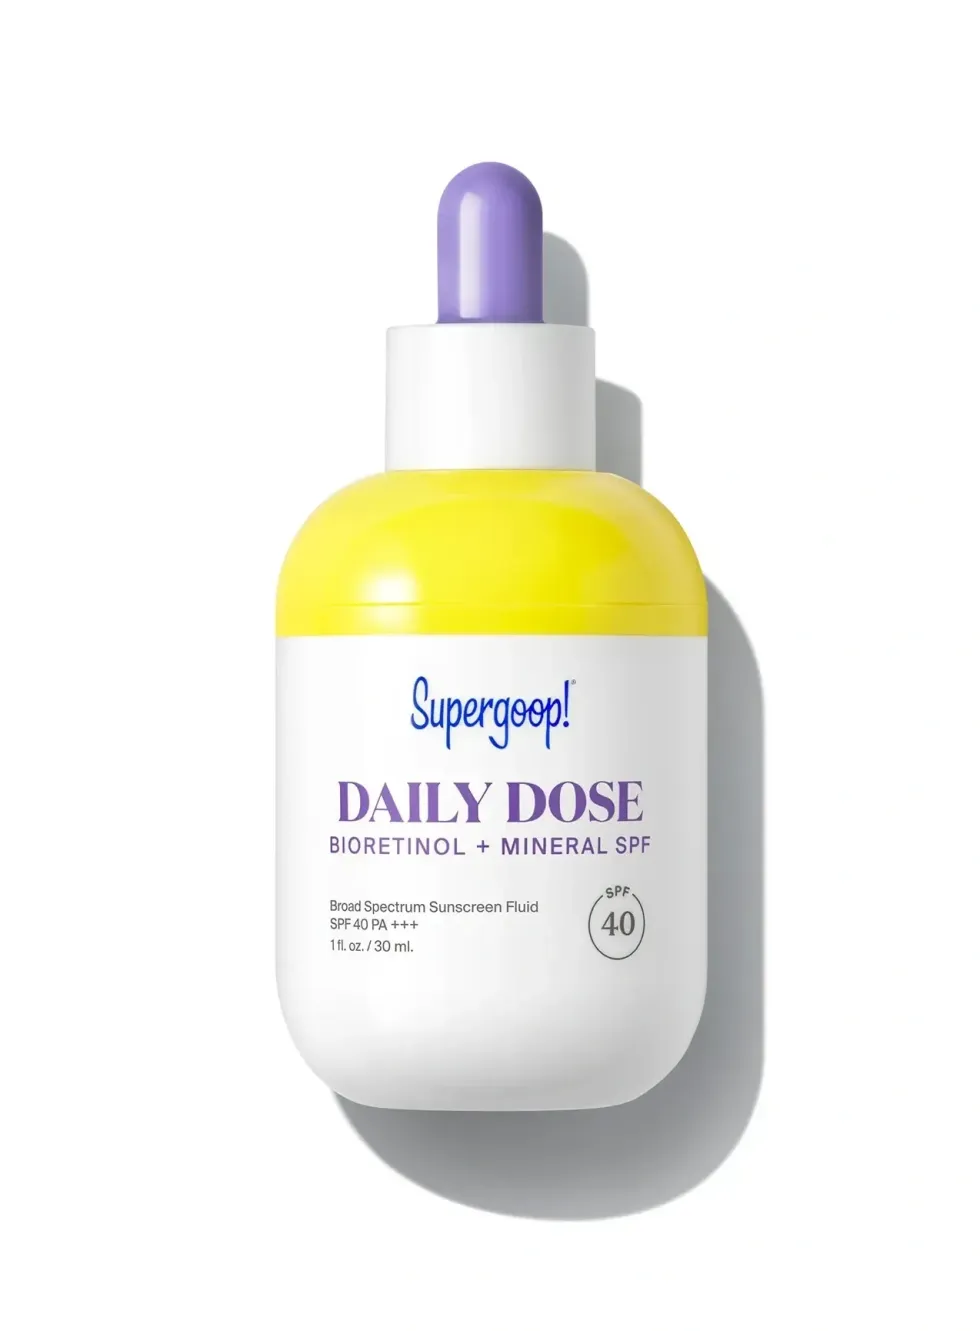 Supergoop! Daily Dose Bioretinol + Mineral SPF 40 Fluid dehydrated skin